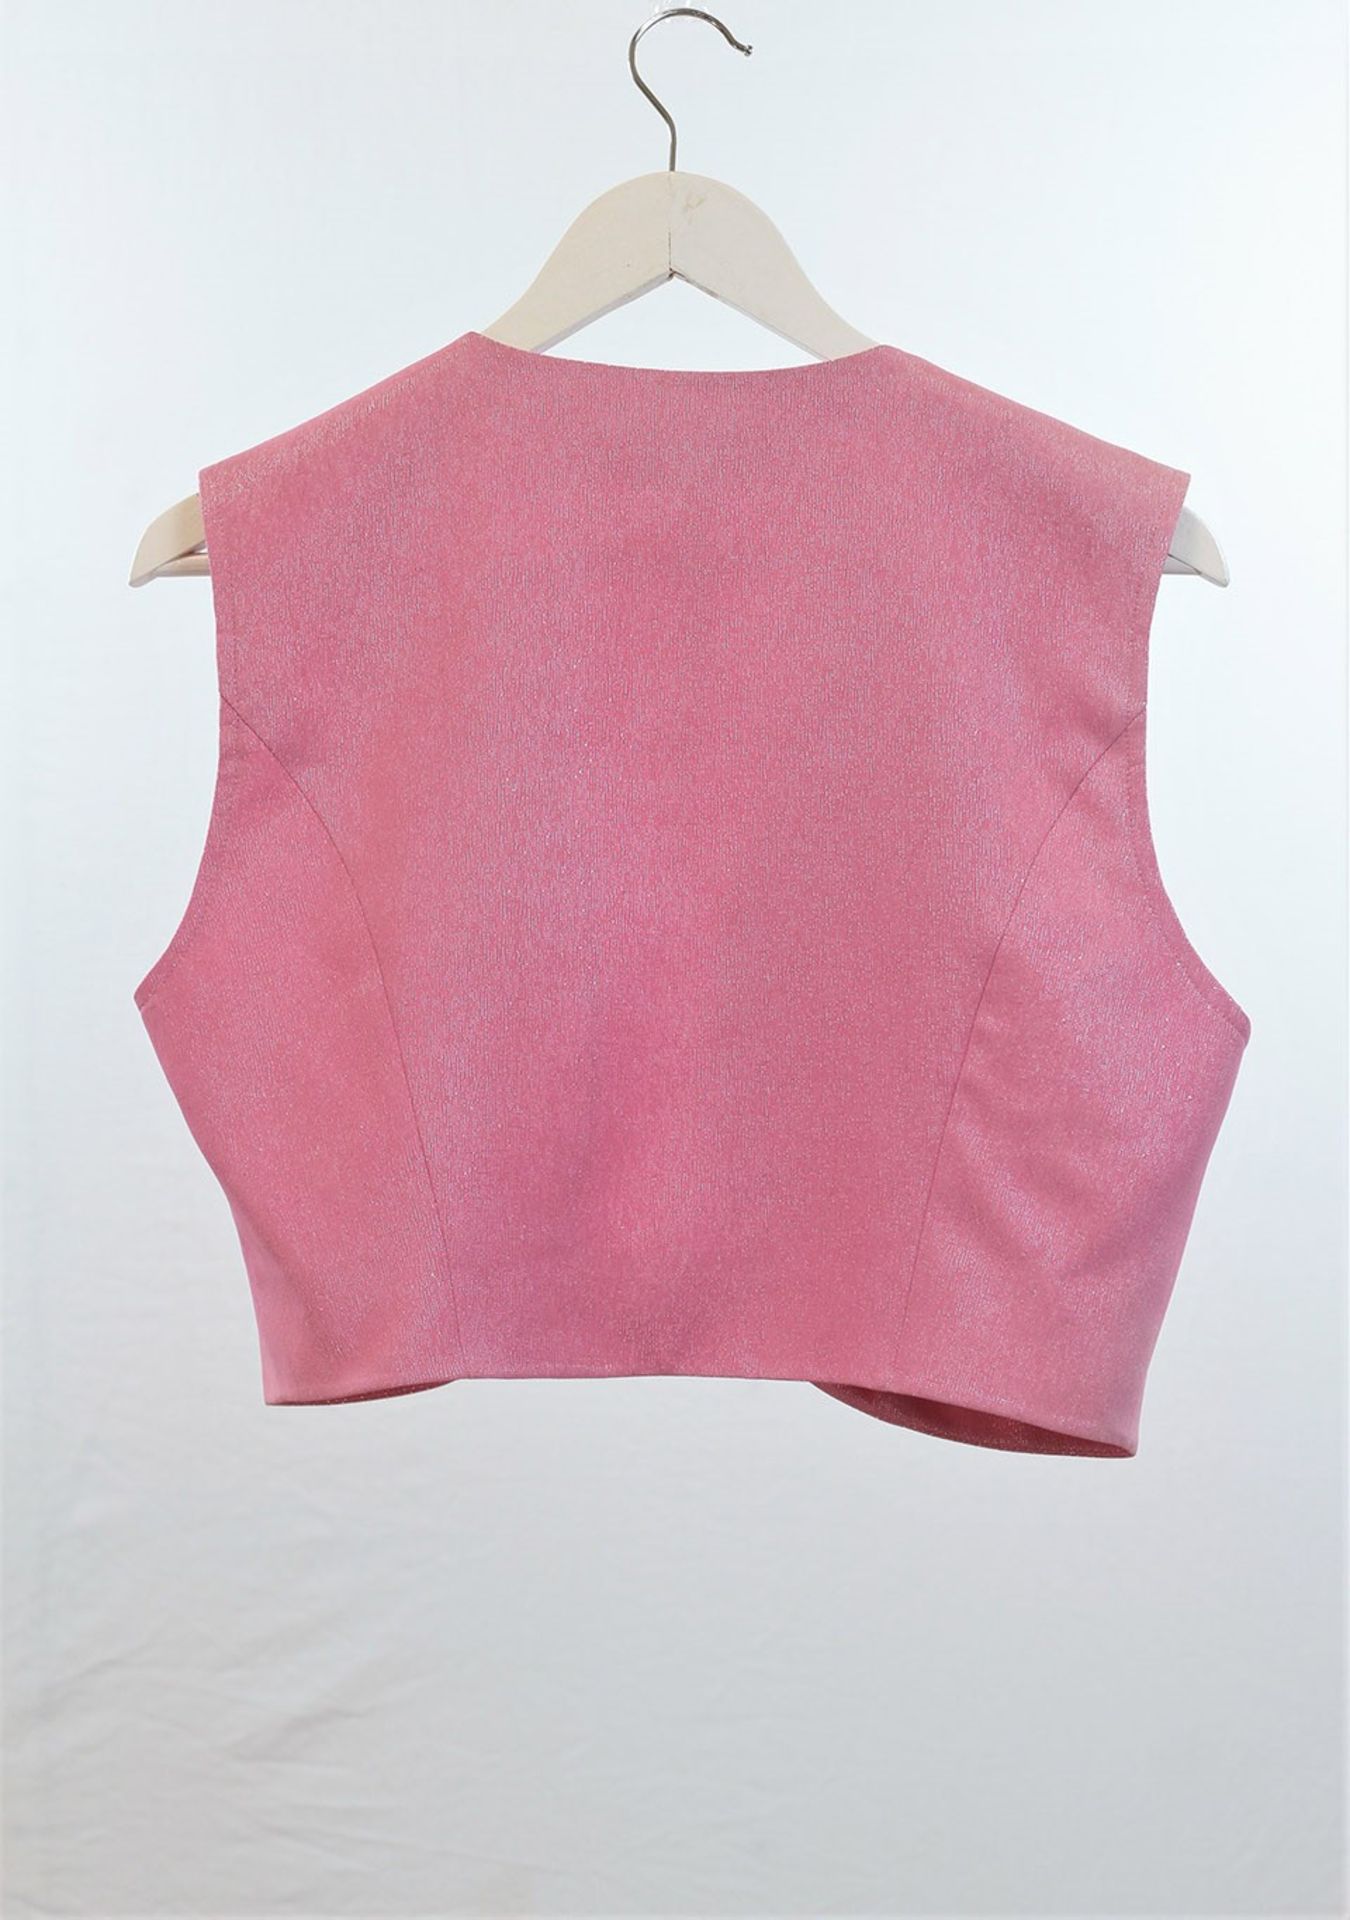 1 x Boutique Le Duc Pink Waistcoat - Size: L - Material: 49% Cotton, 40% Acetate, 11% Poly metal - Image 4 of 7